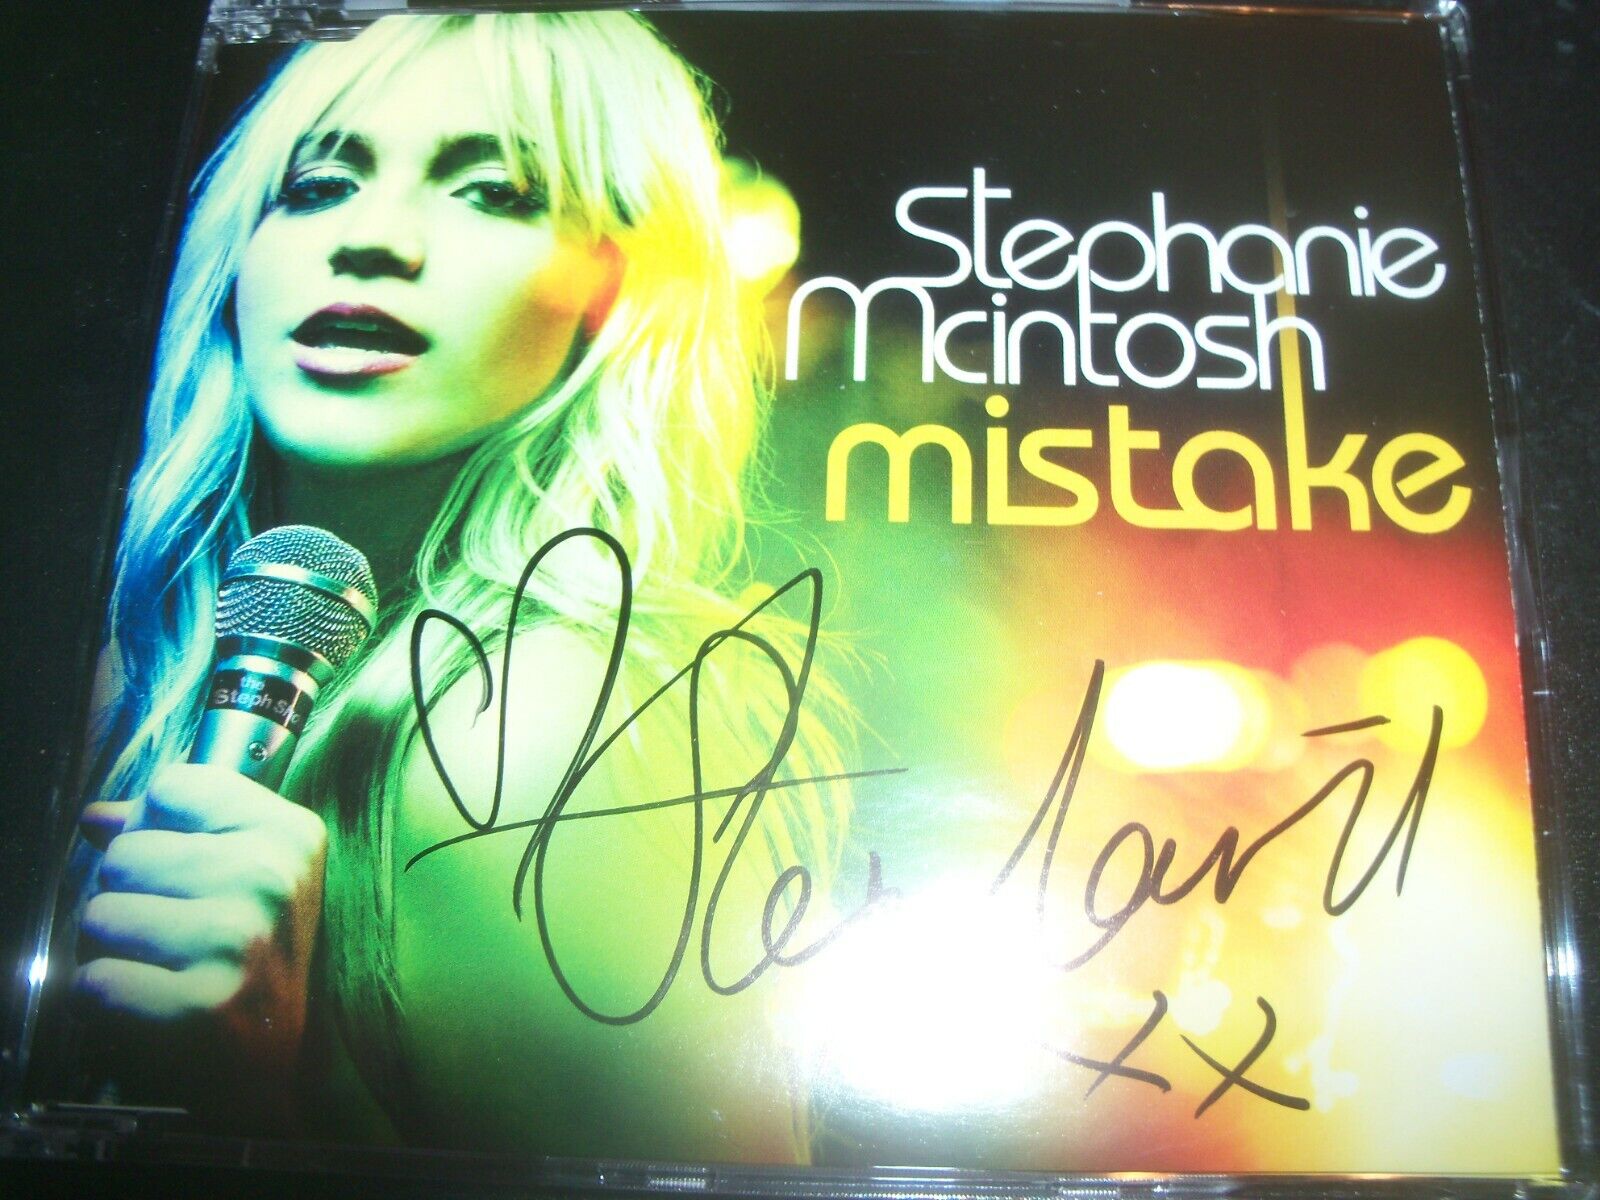 Stephanie mcintosh neighbours mistake signed tographed cd single